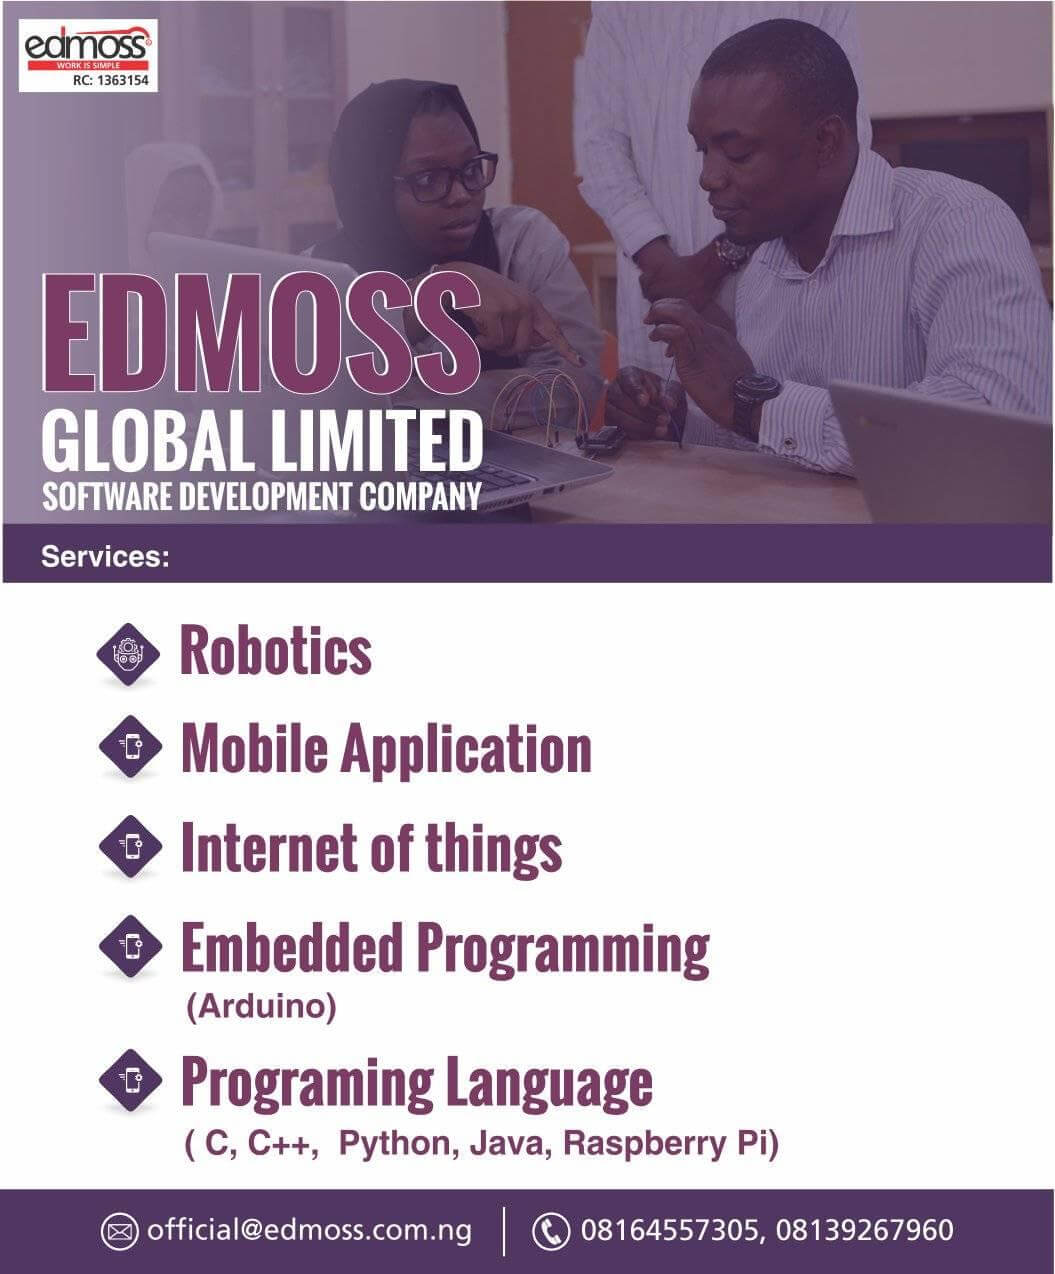 Winner Image - Edmoss Global Limited